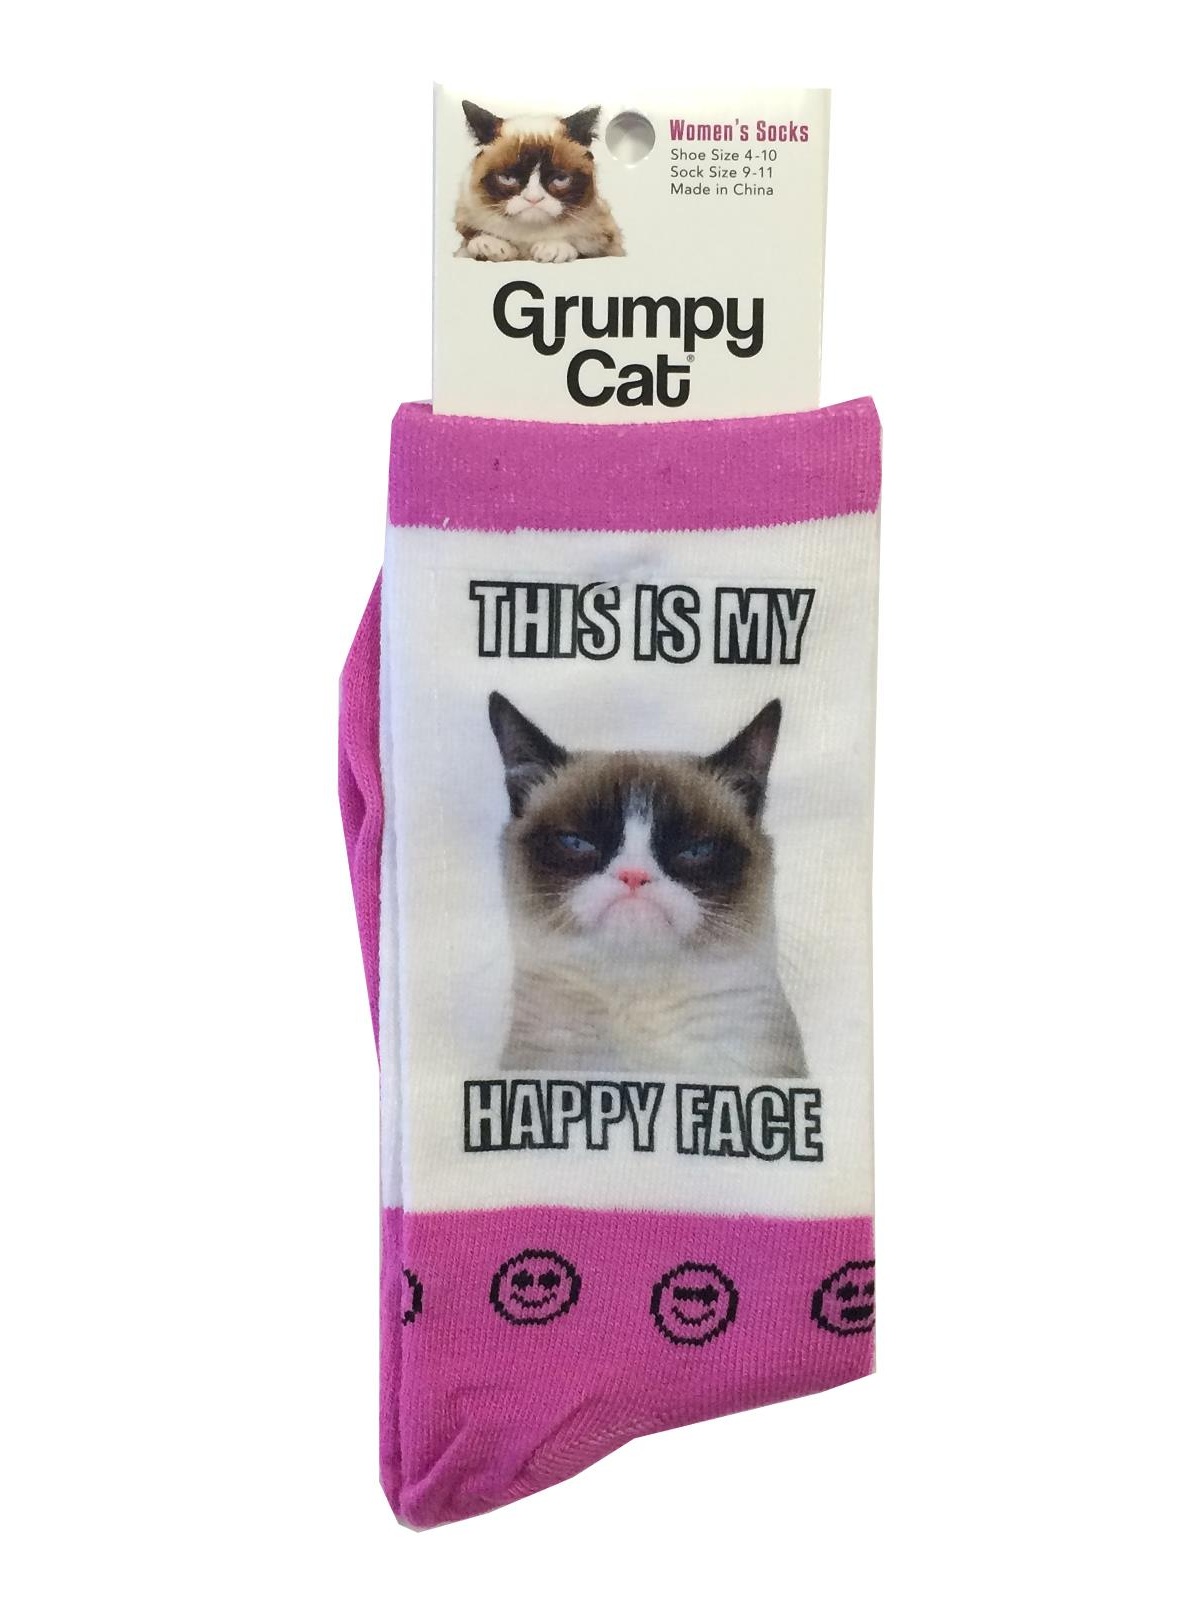 grumpy cat socks